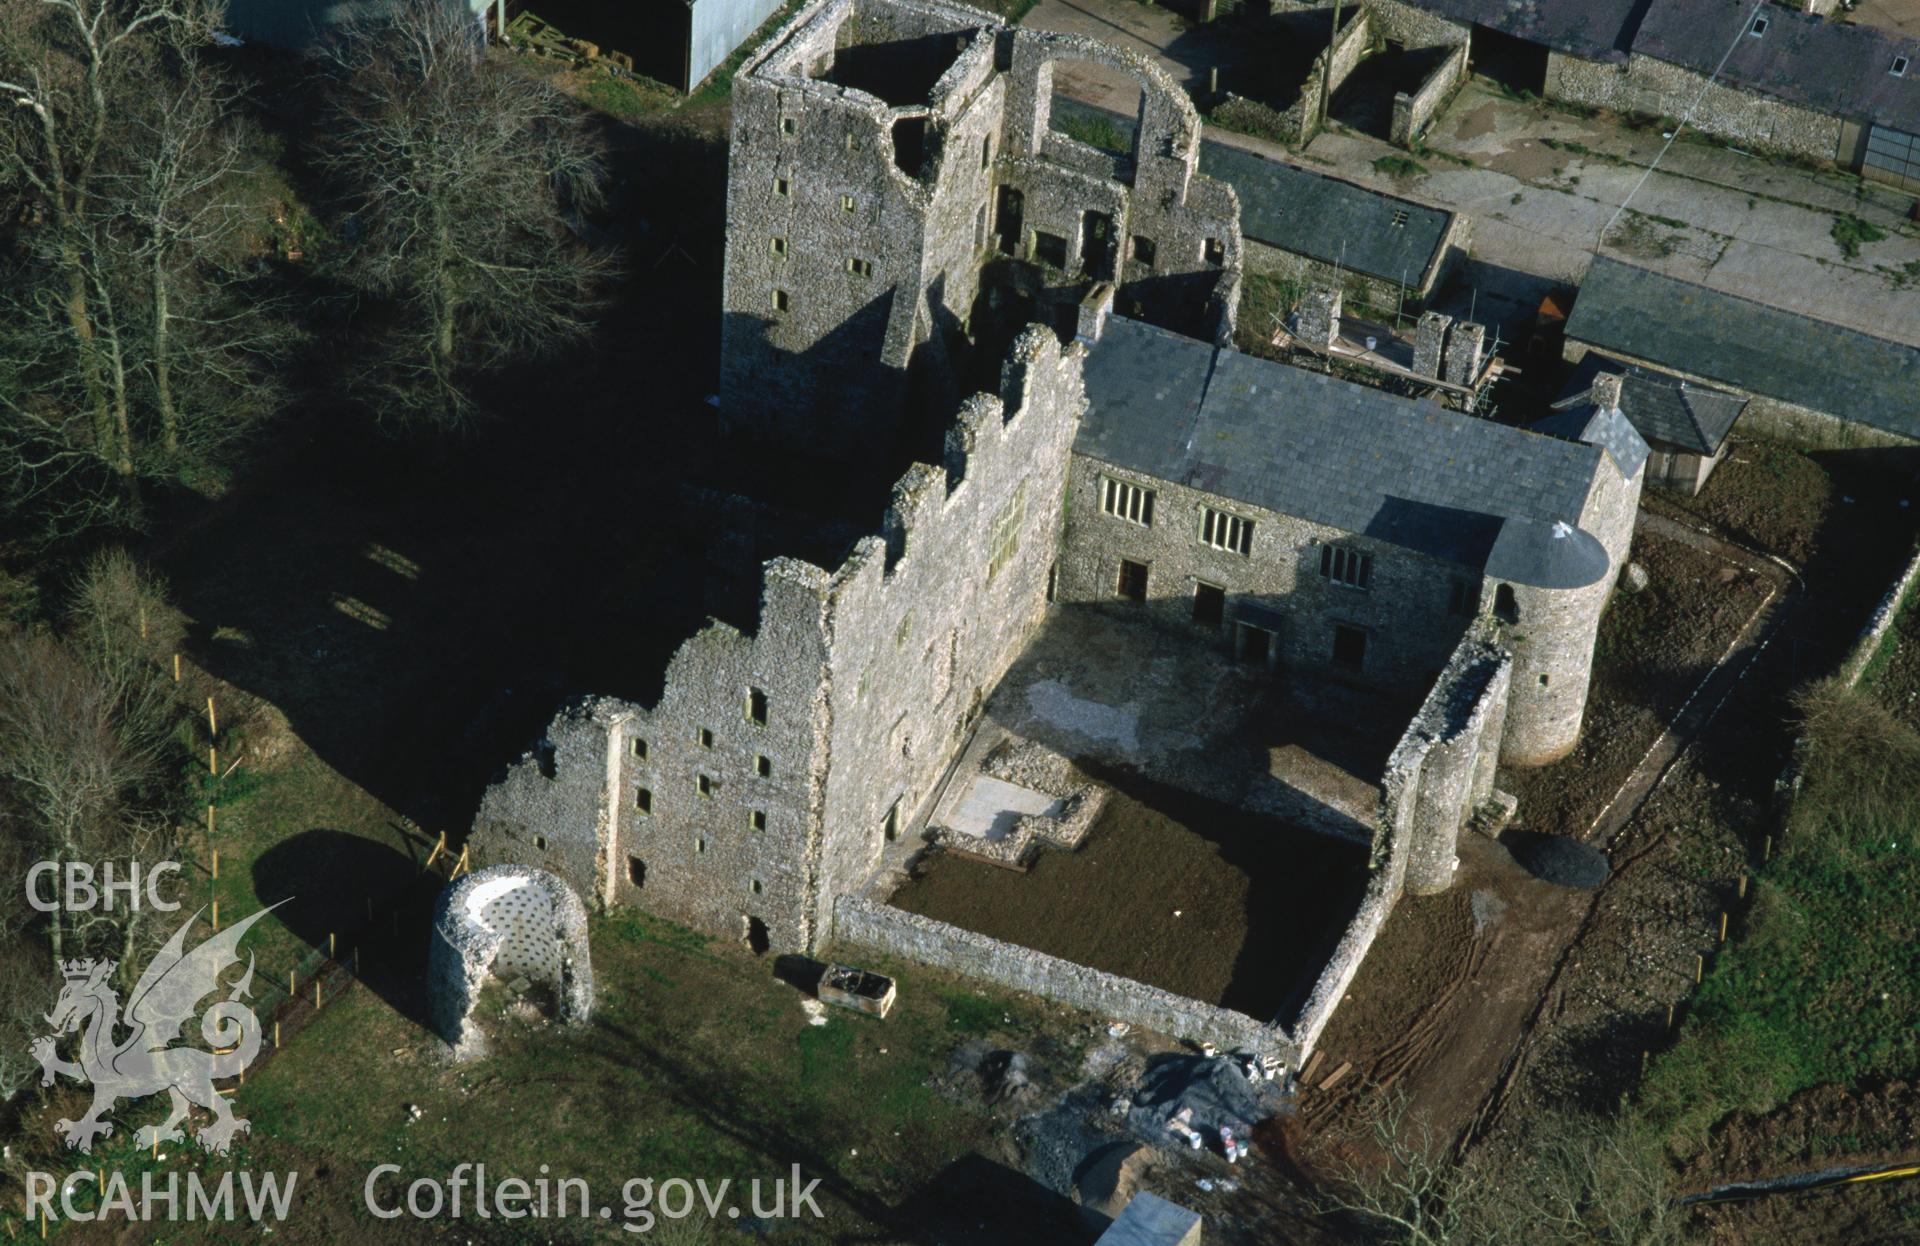 RCAHMW colour slide oblique aerial photograph of Oxwich Castle, Penrice, taken by C.R. Musson, 29/03/94